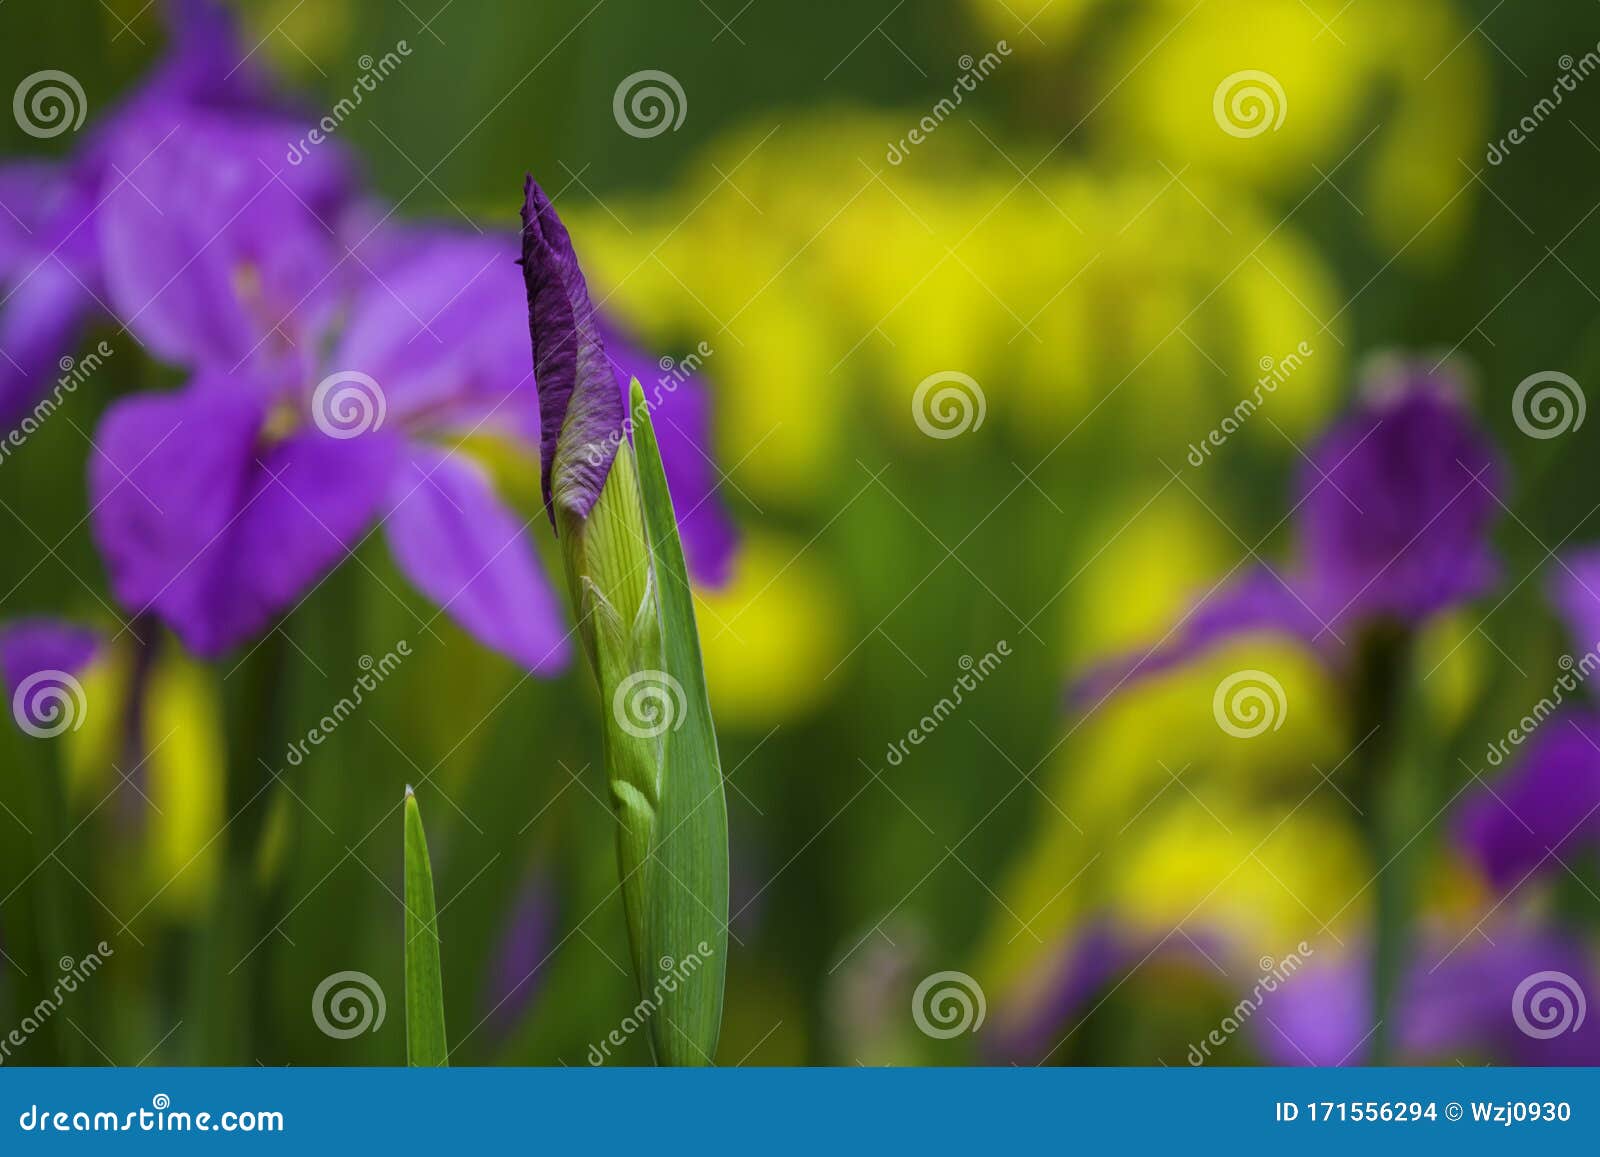 a lilac iris flower bud in the garden